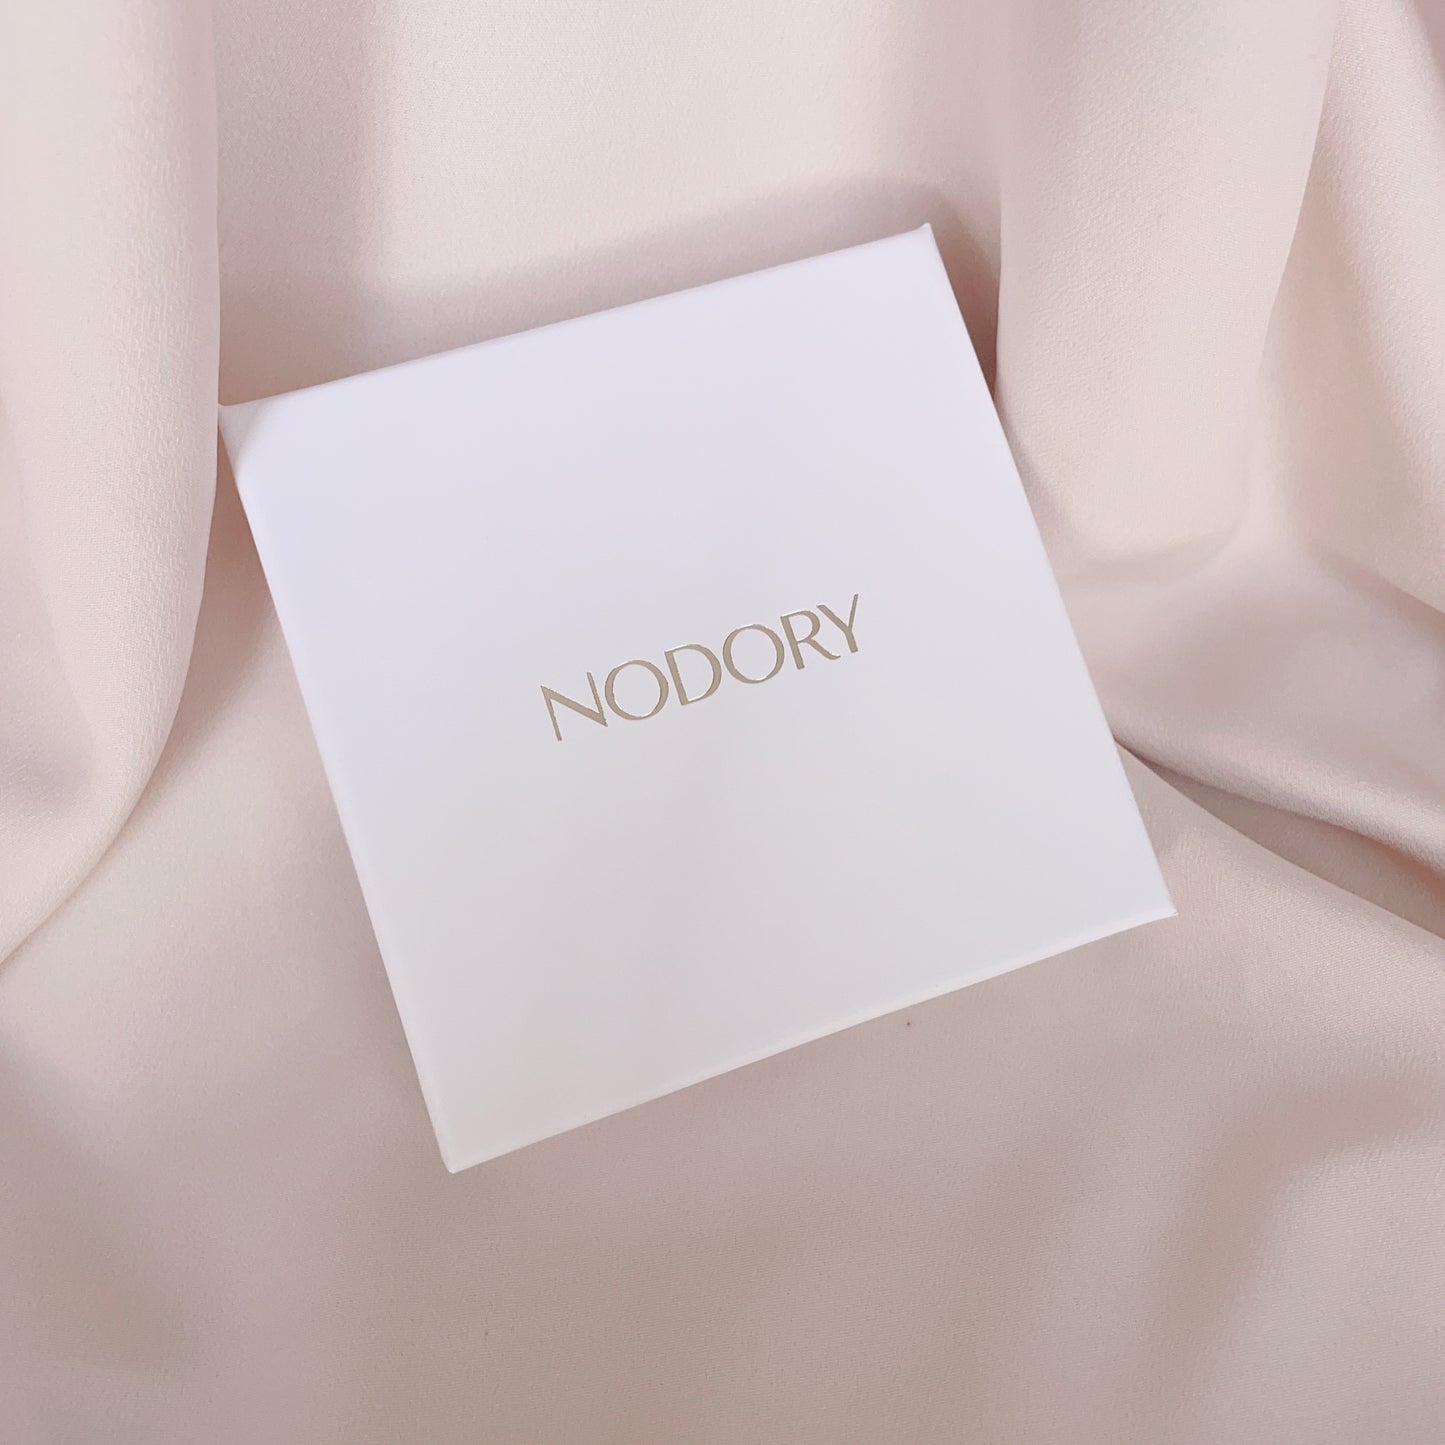 Signature Nodory Gift Box